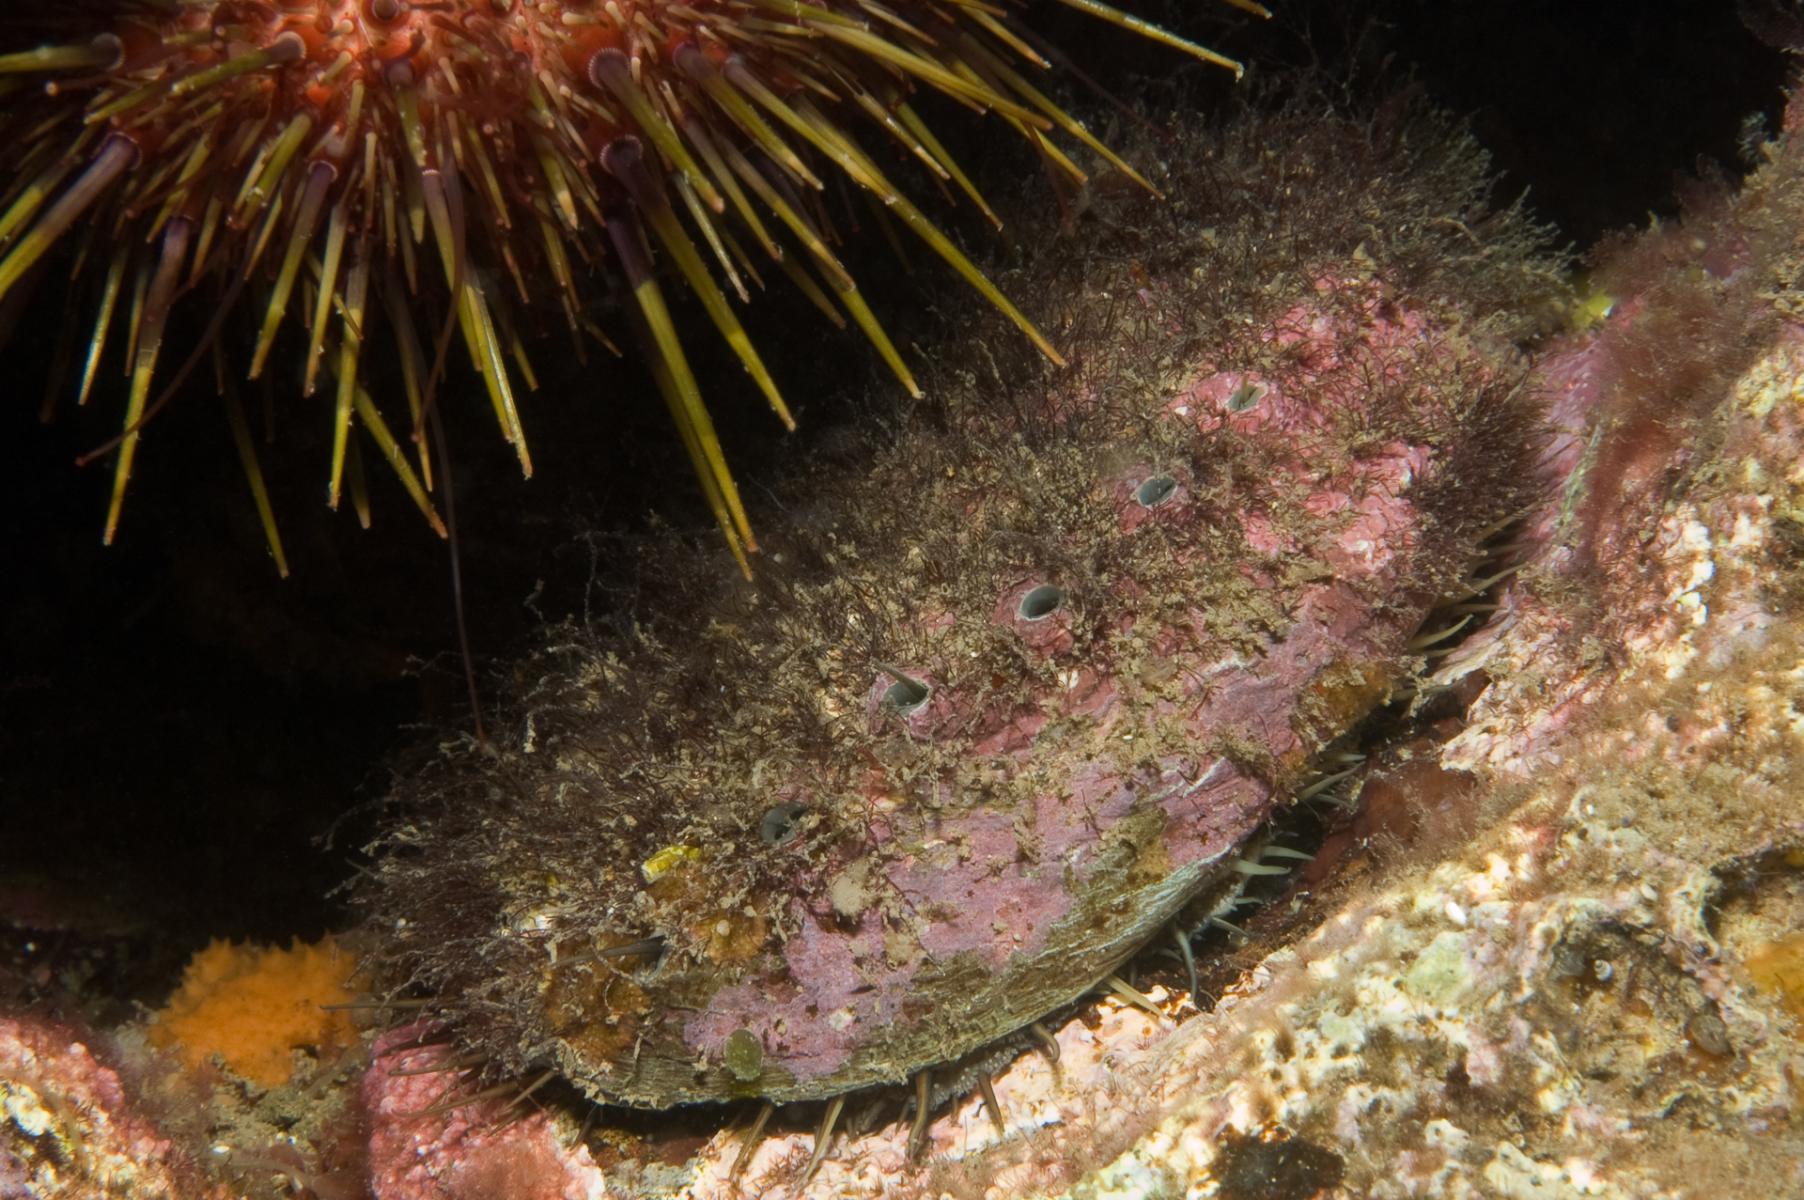 Haliotis rubra: black-lipped abalone with a sea urchin